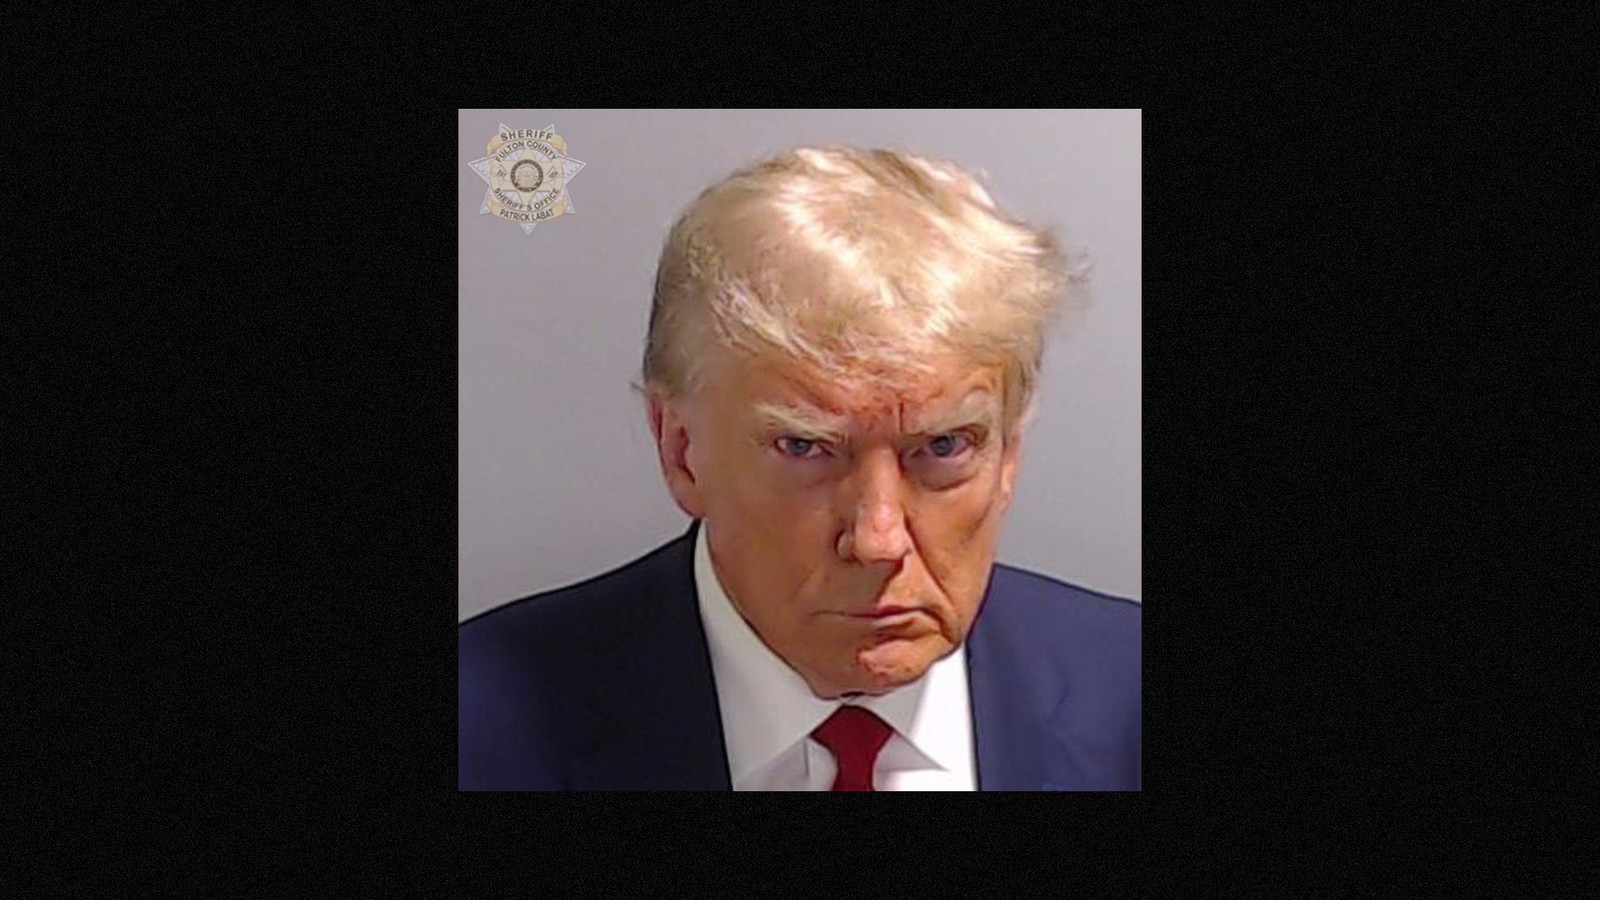 Trump Mug Shot Wanted for President Stainless Steel Travel Mug